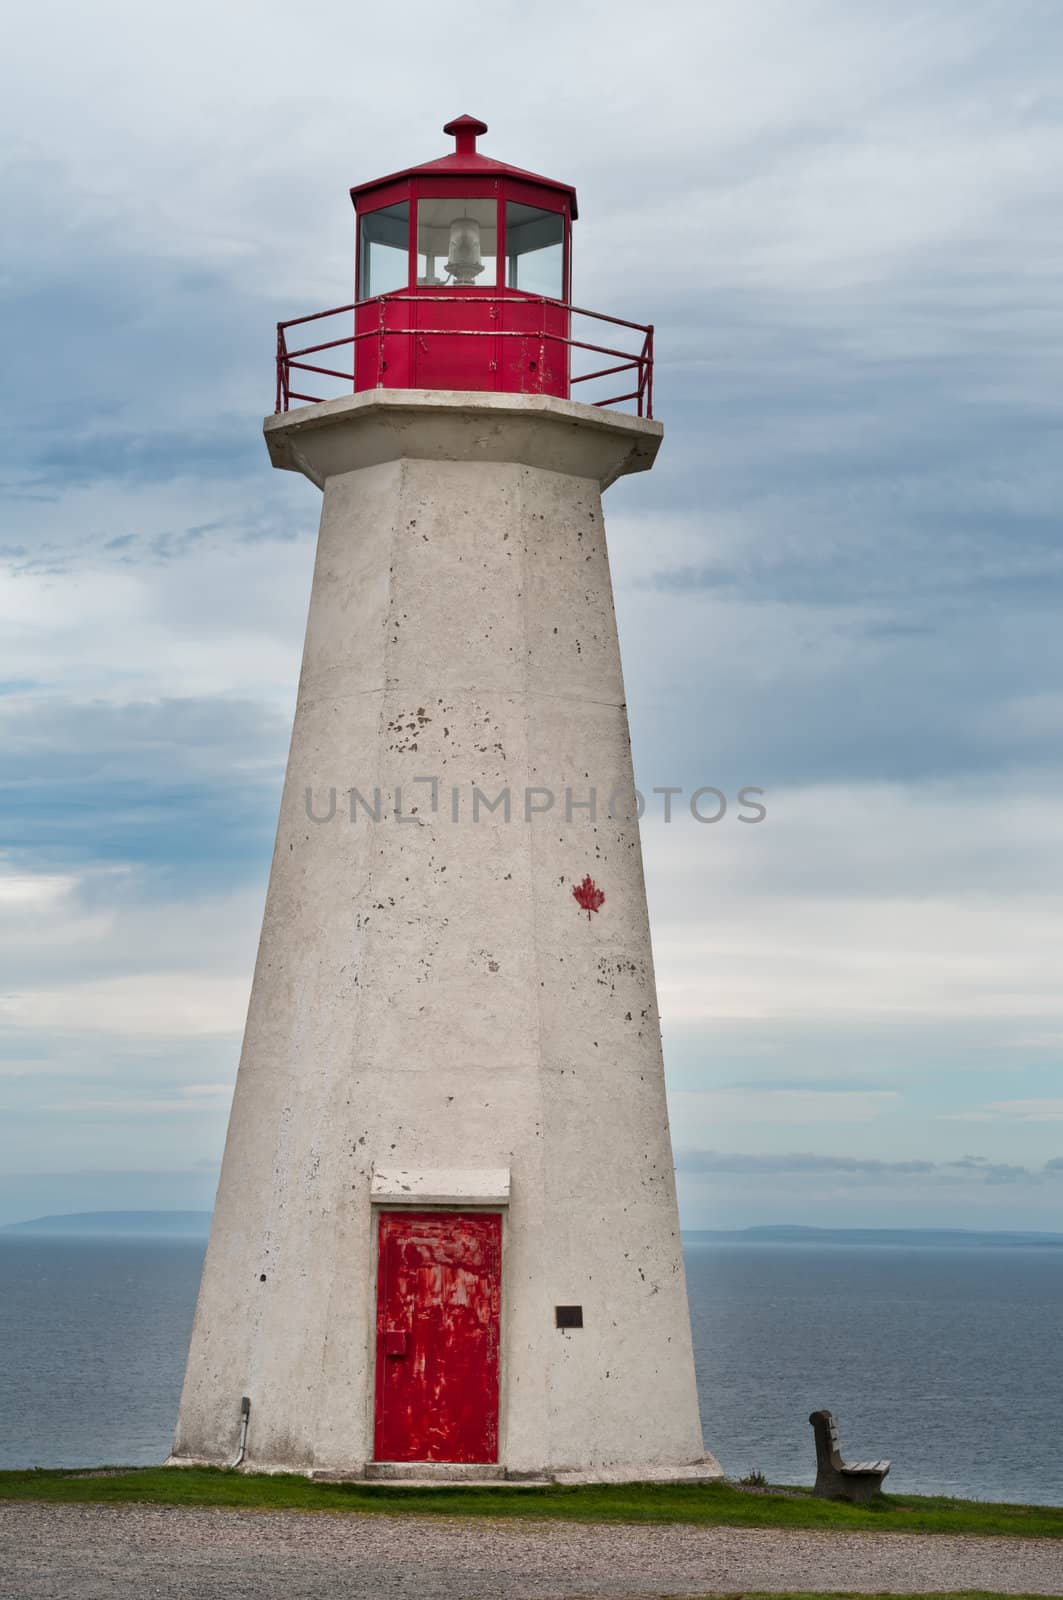 Cape george Lighthouse, on a cloudy day, Nova Scotia, Canada